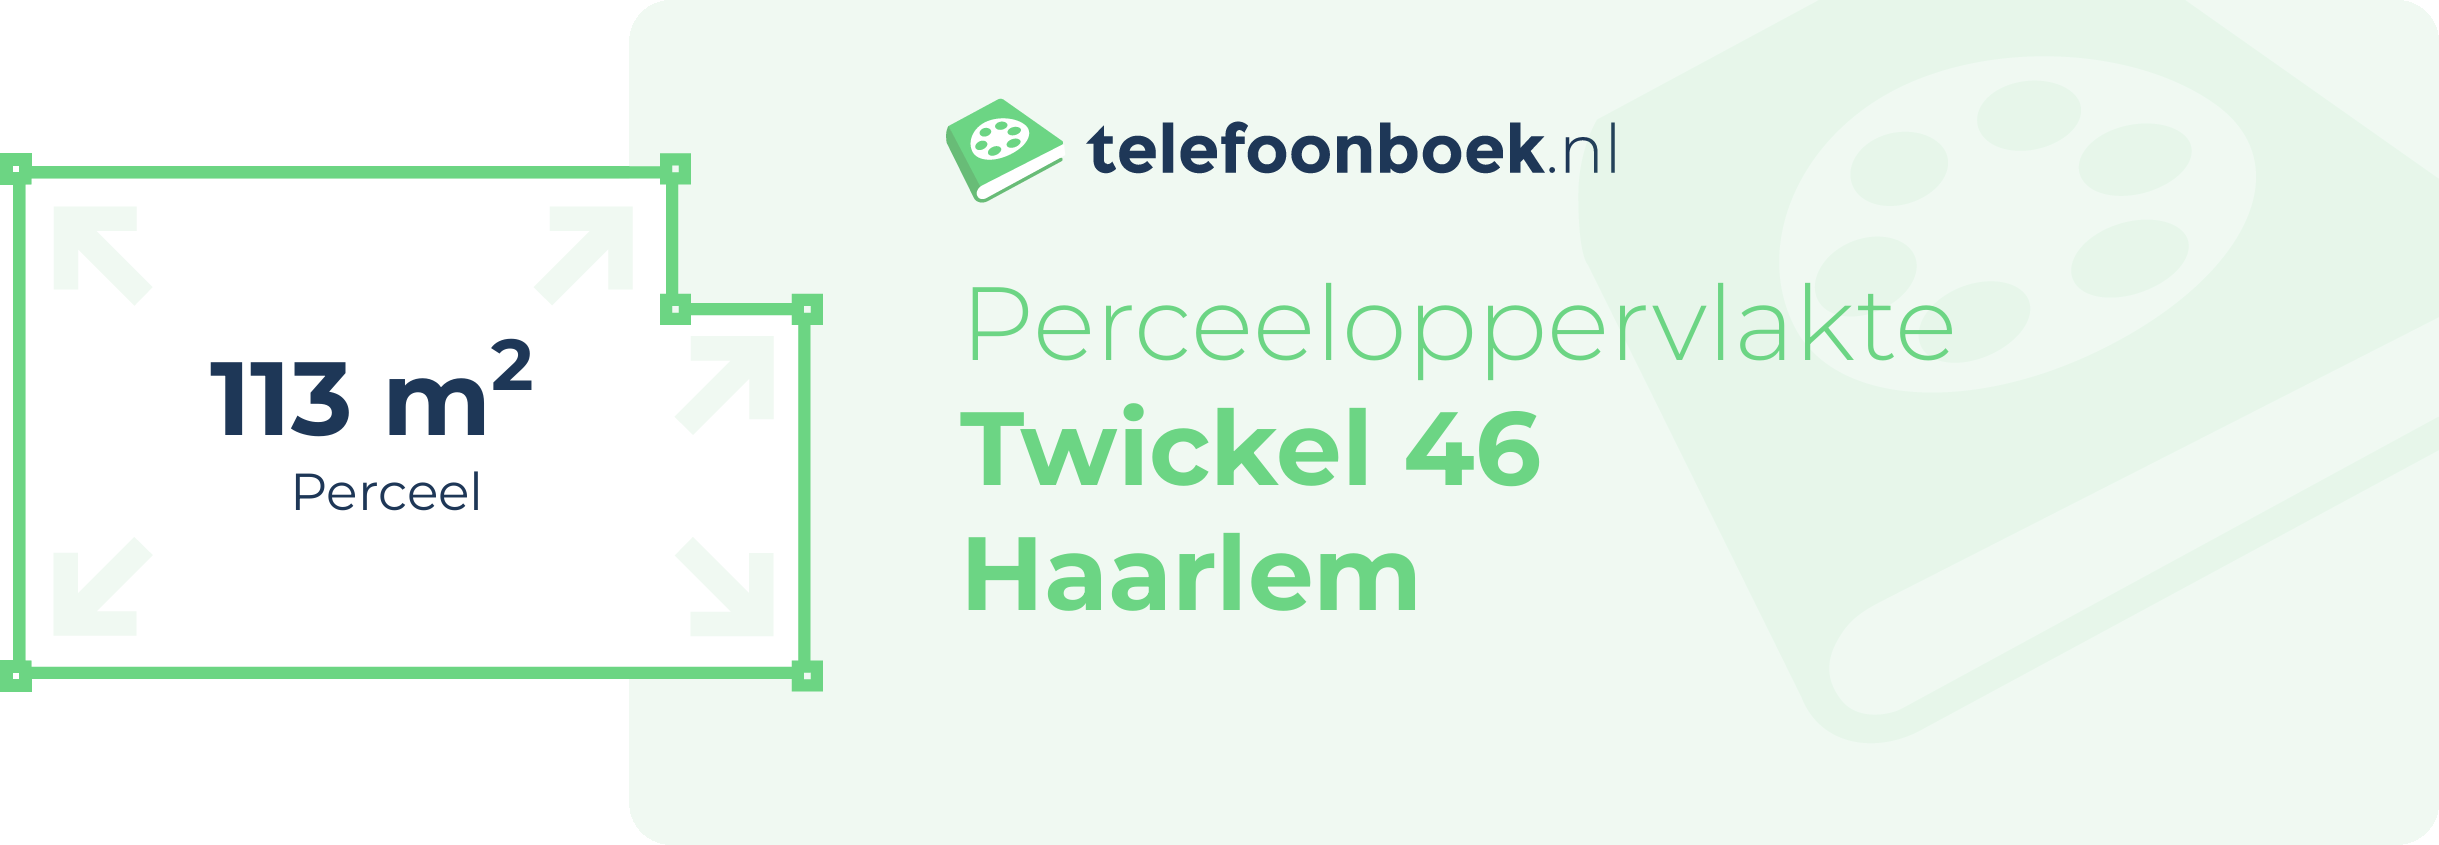 Perceeloppervlakte Twickel 46 Haarlem